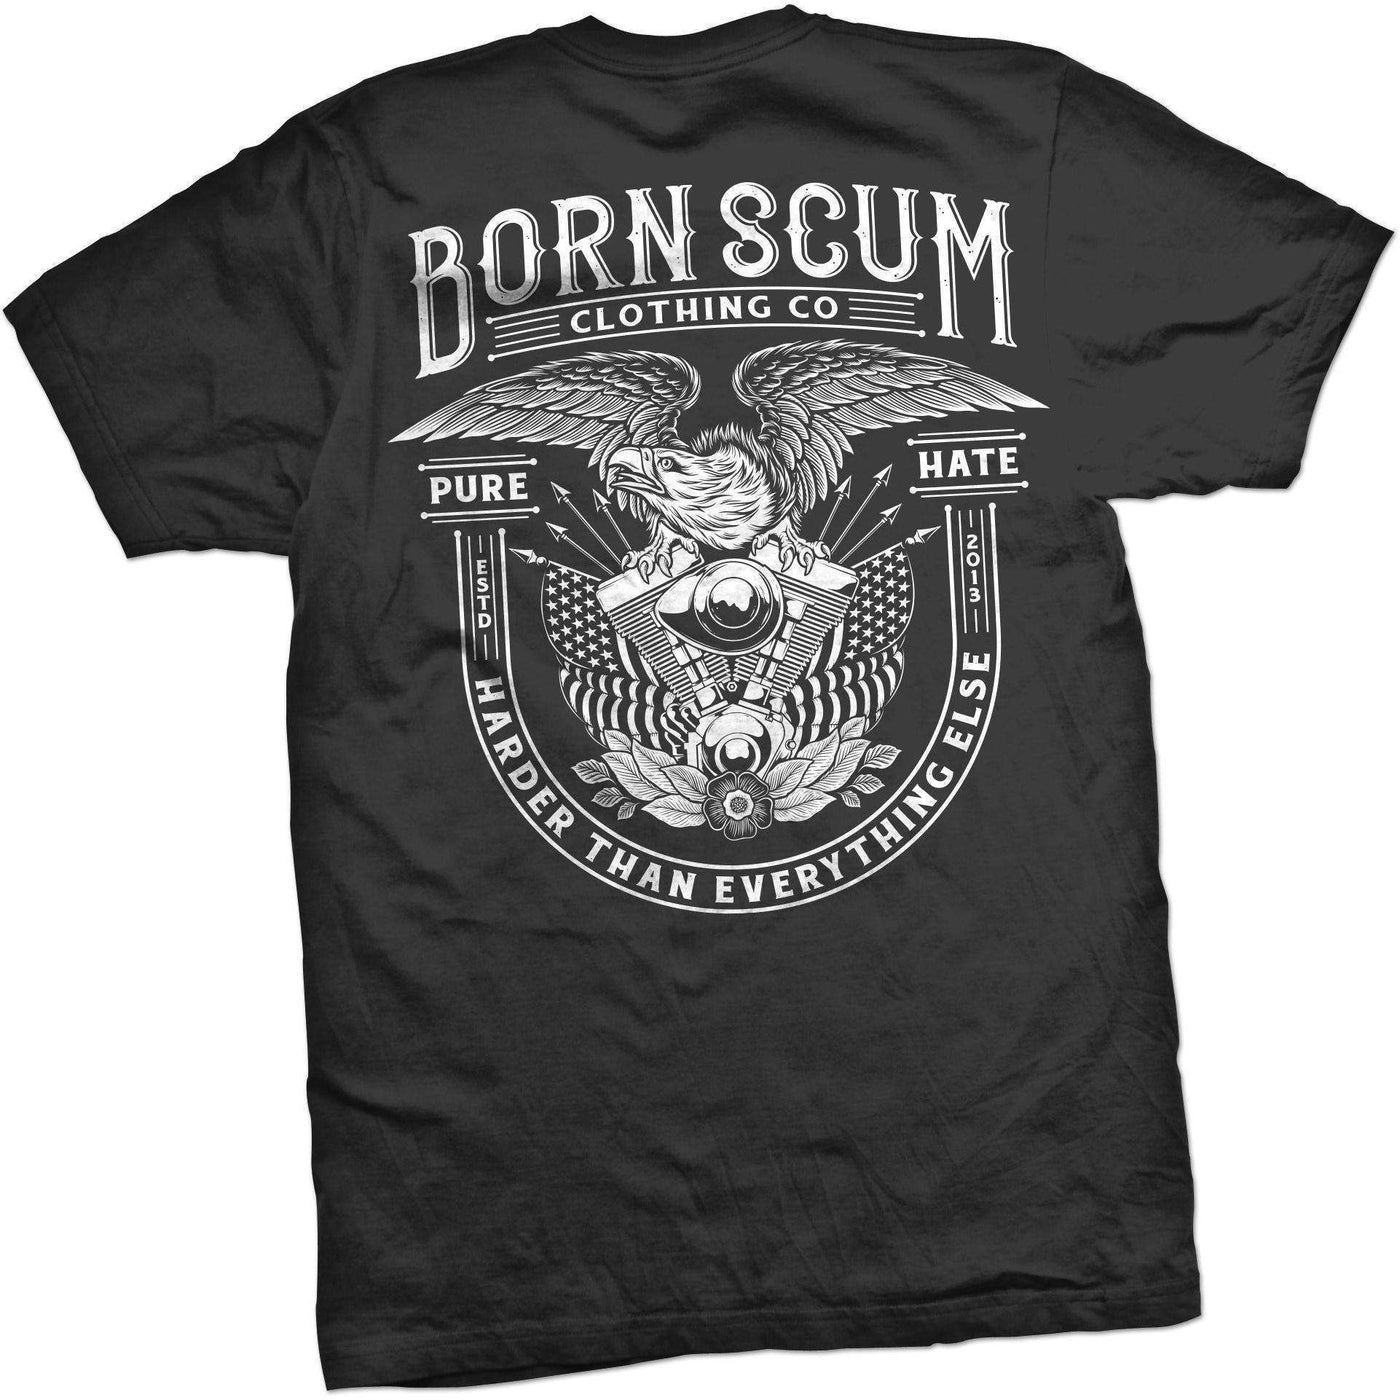 FREEDOM T-SHIRT - Born Scum Clothing Co